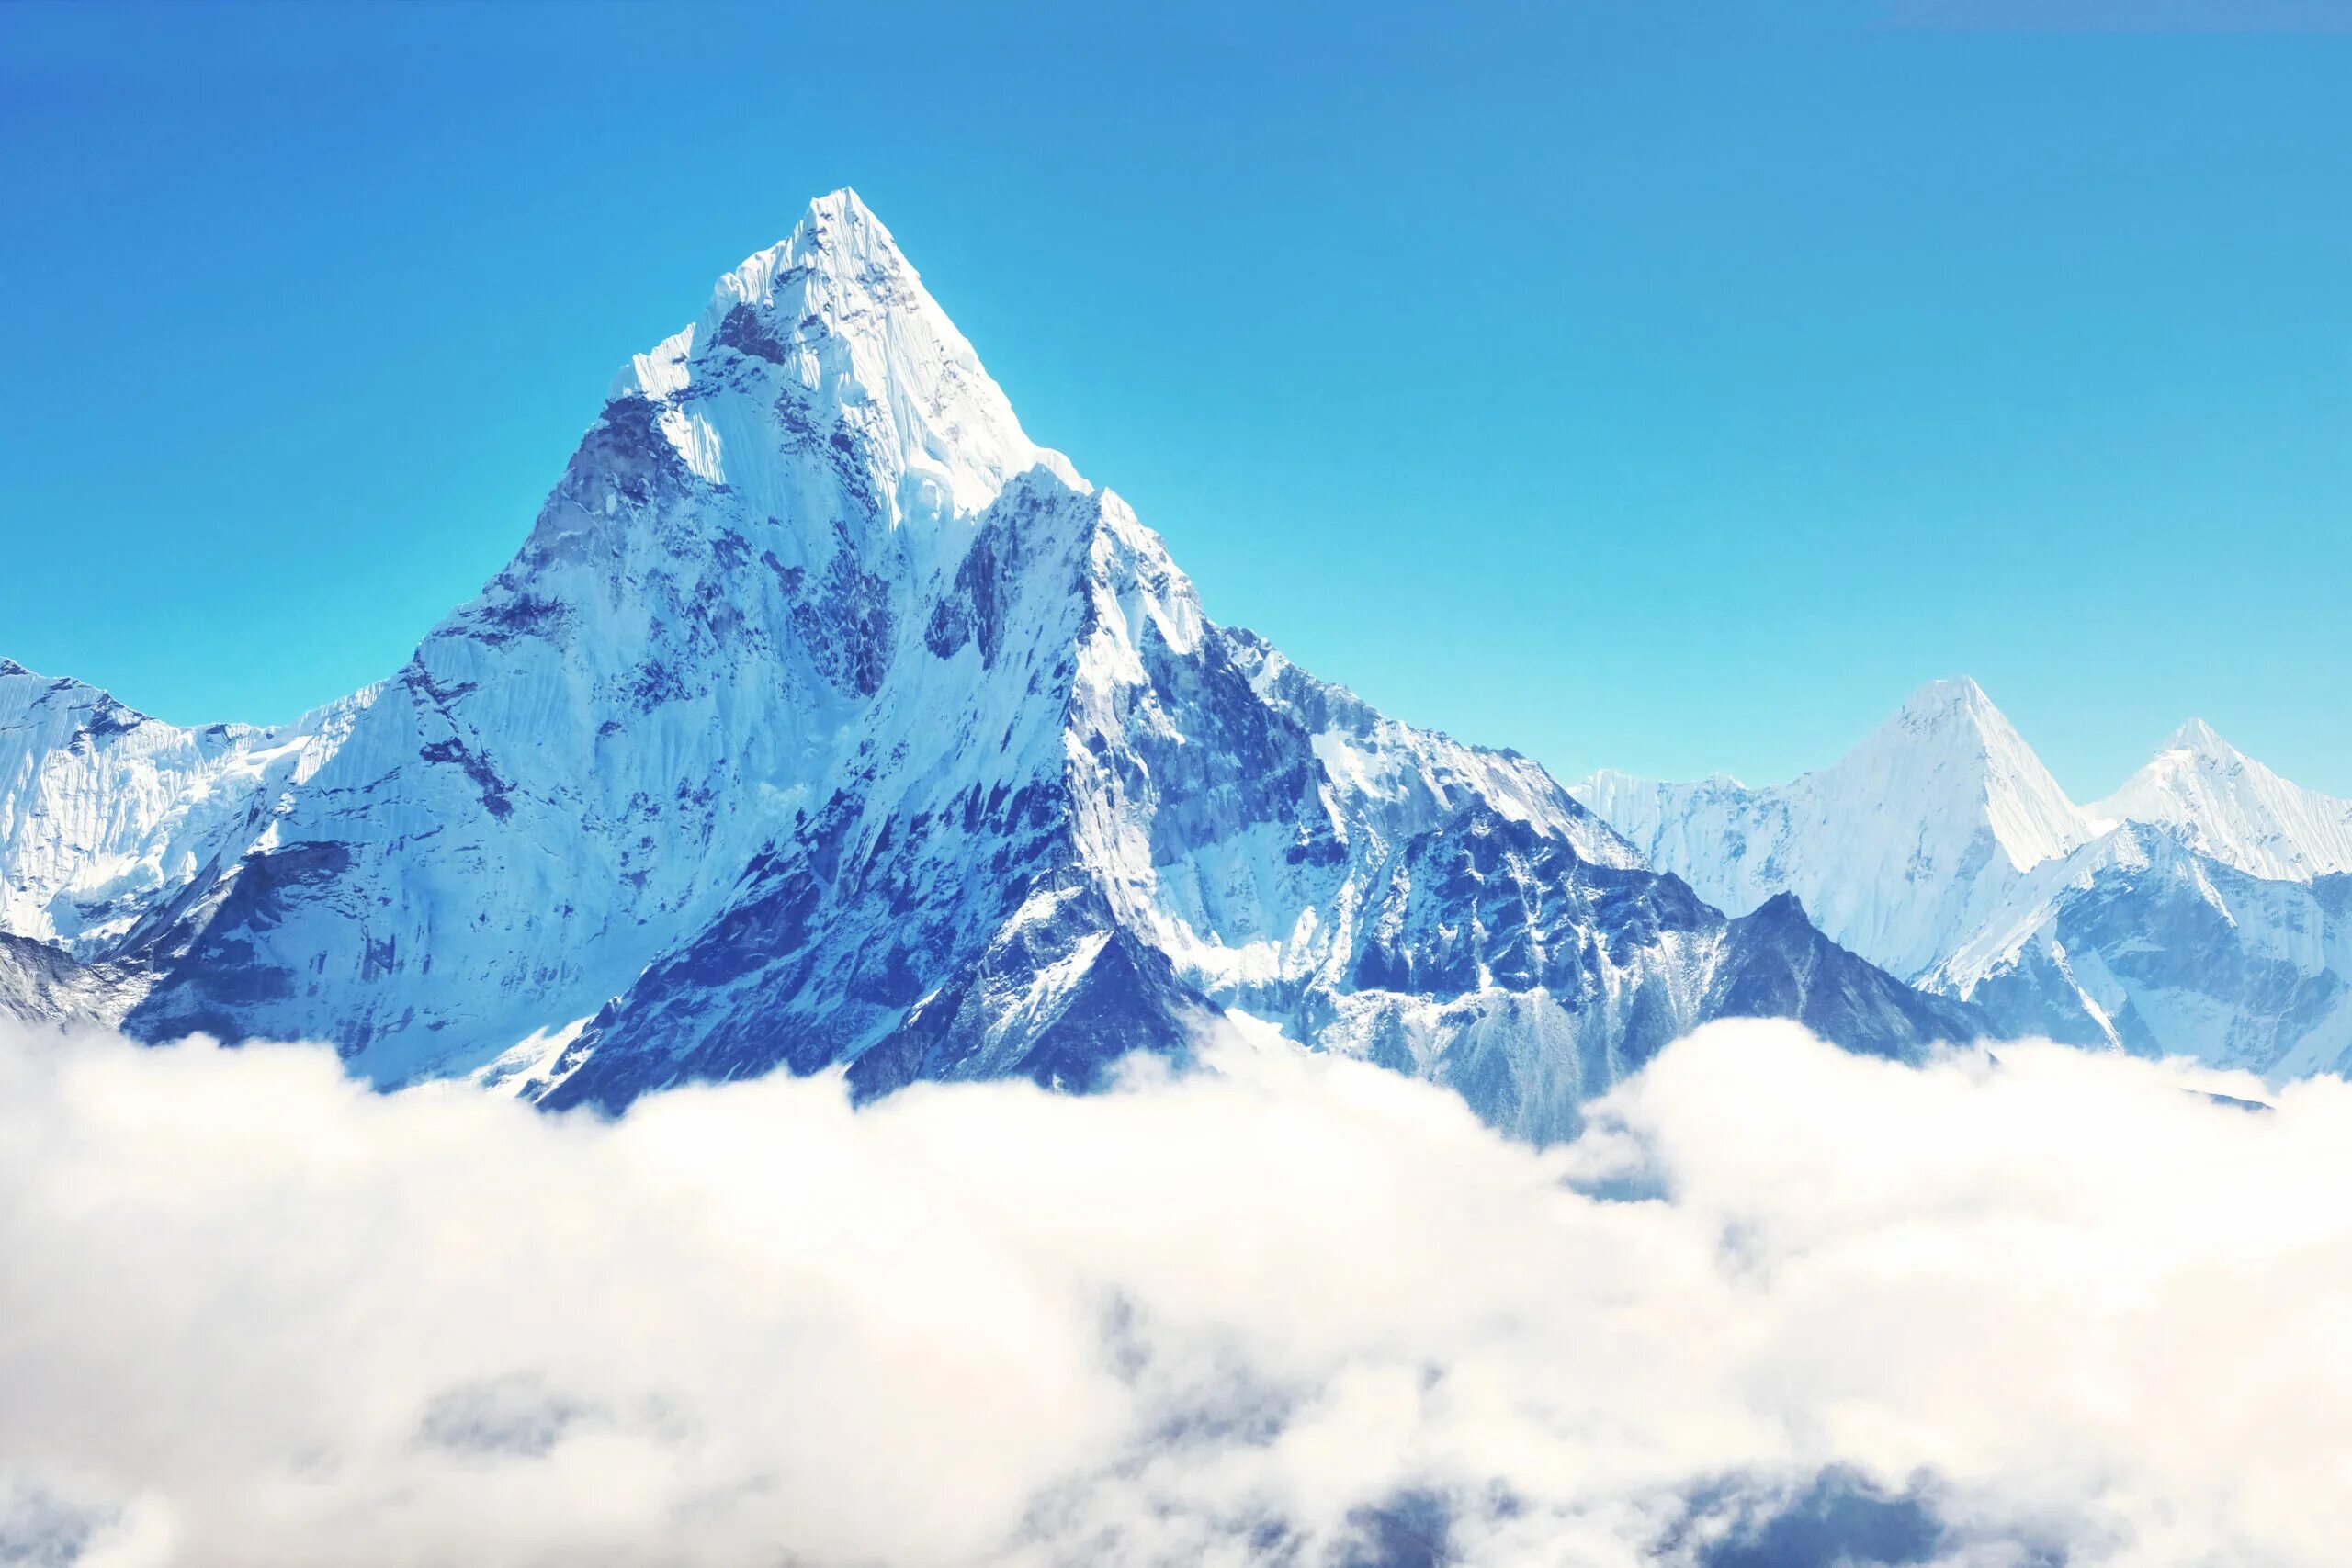 Гора Эверест. Джомолунгма (Гималаи) - 8848. Эверест (Джомолунгма) высота (м): 8848,86. Гора Эверест вектор.